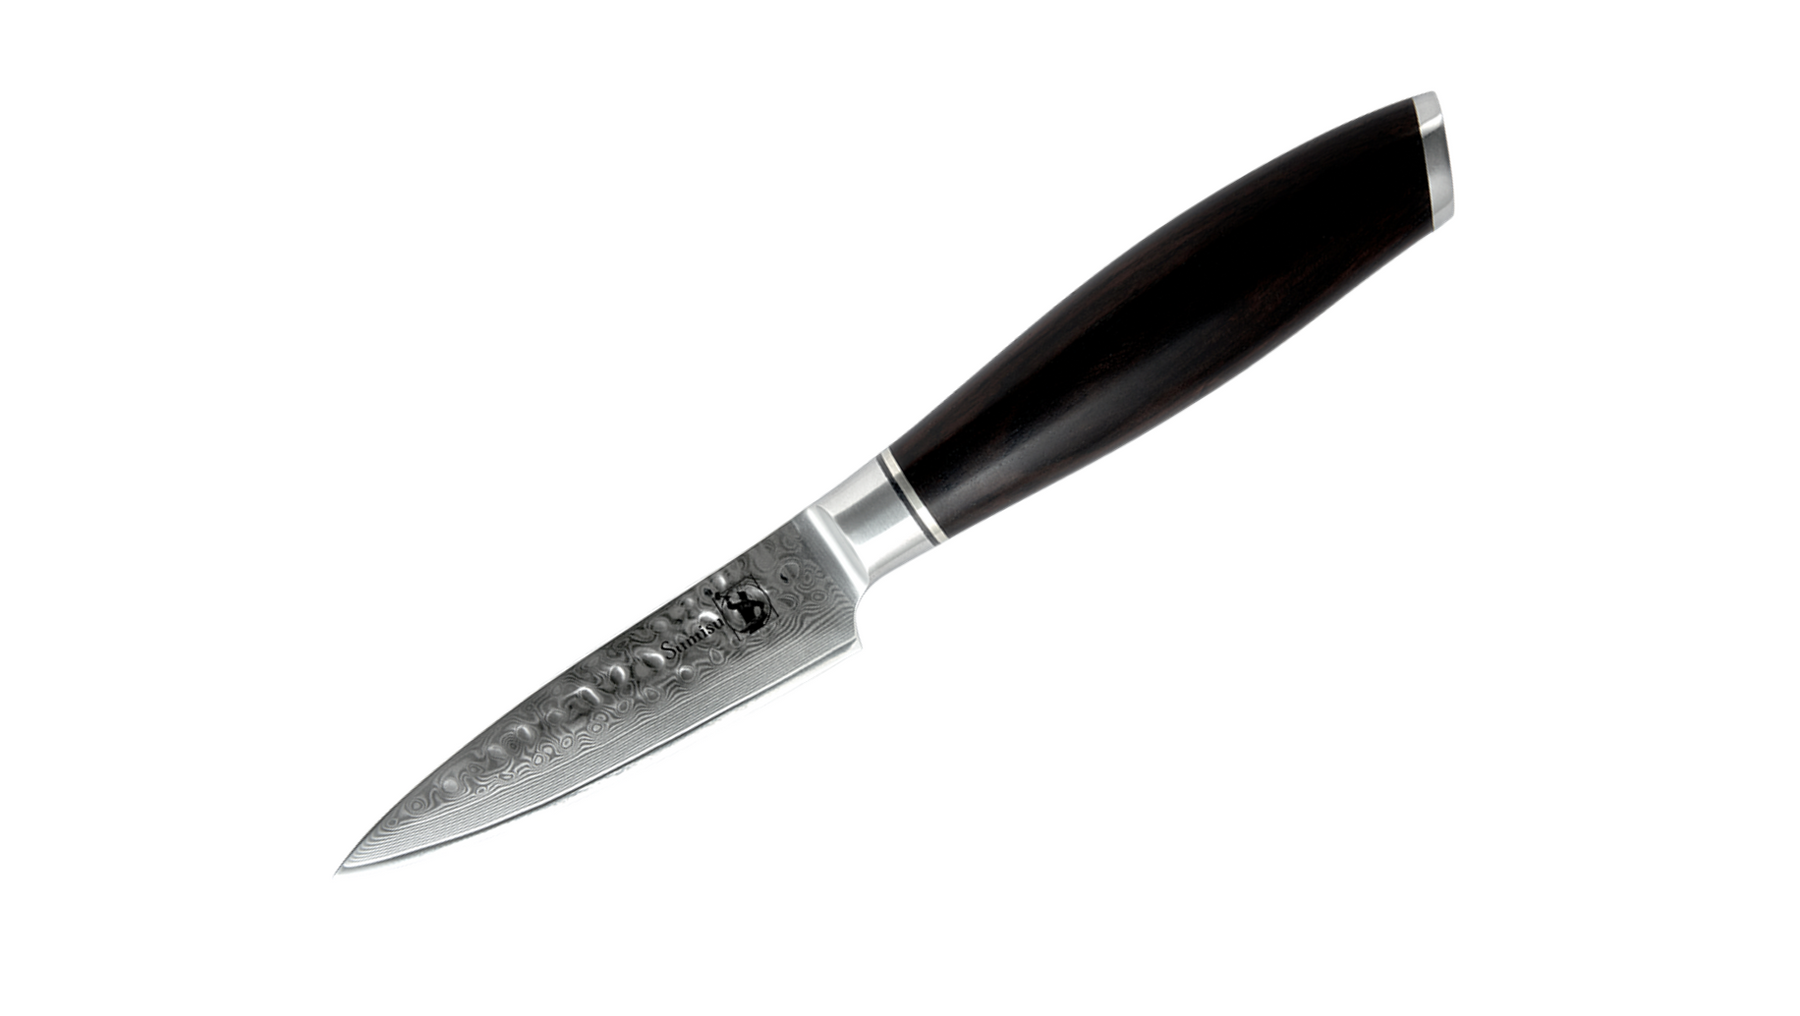 Kaki urtekniv turneringskniv i 67 lag damaskus stål. FSC certificeret ibenholttræ